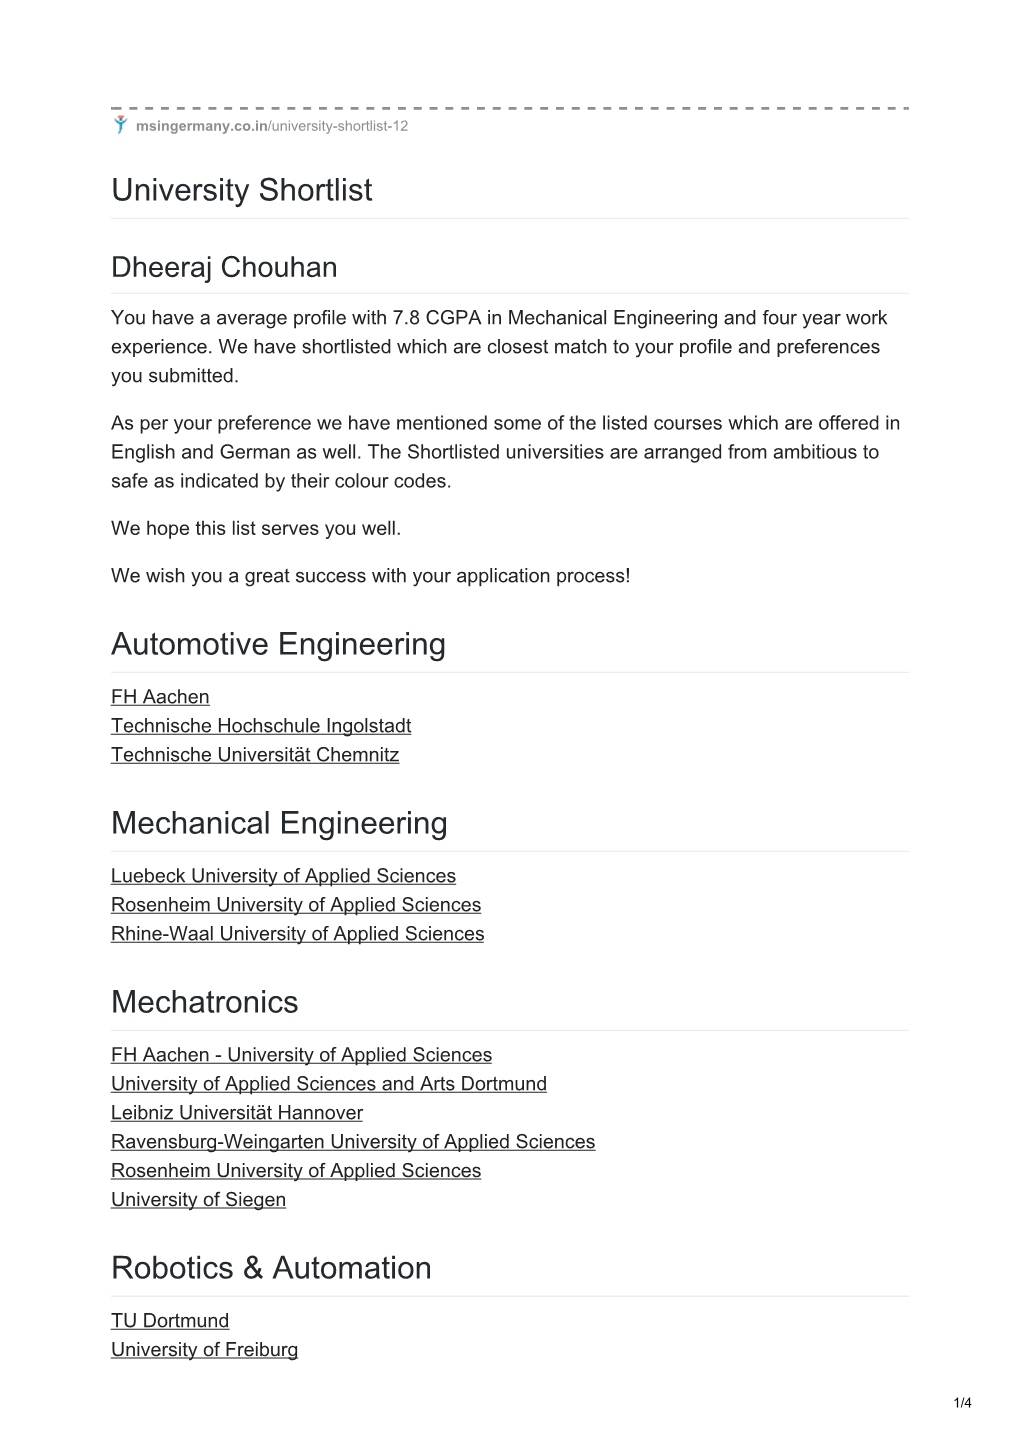 University Shortlist Automotive Engineering Mechanical